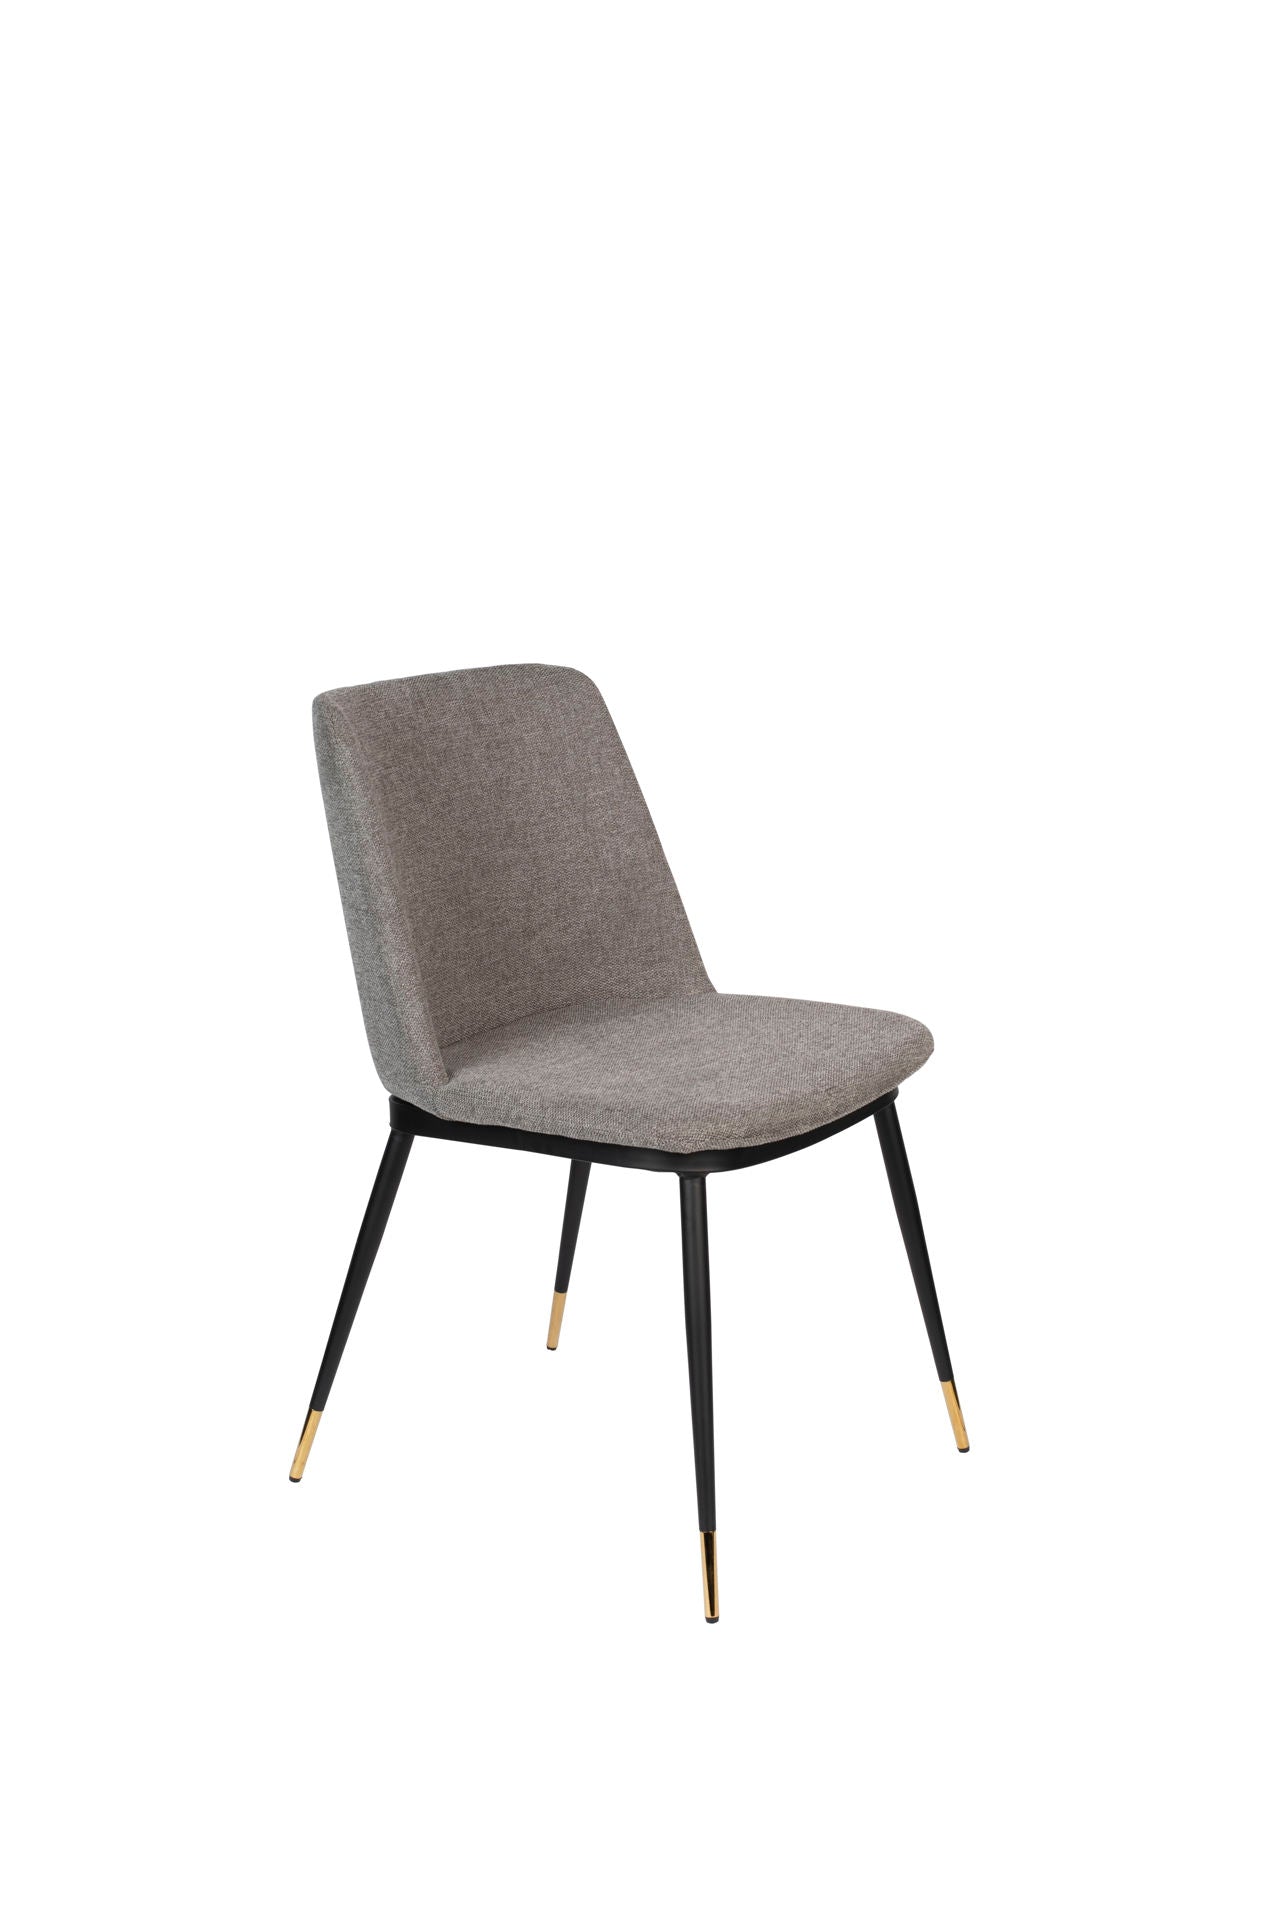 Nancy's Alamo Heights Chair - Retro - Light gray, Black - Polypropylene, Steel, Plywood - 63 cm x 49.6 cm x 80 cm